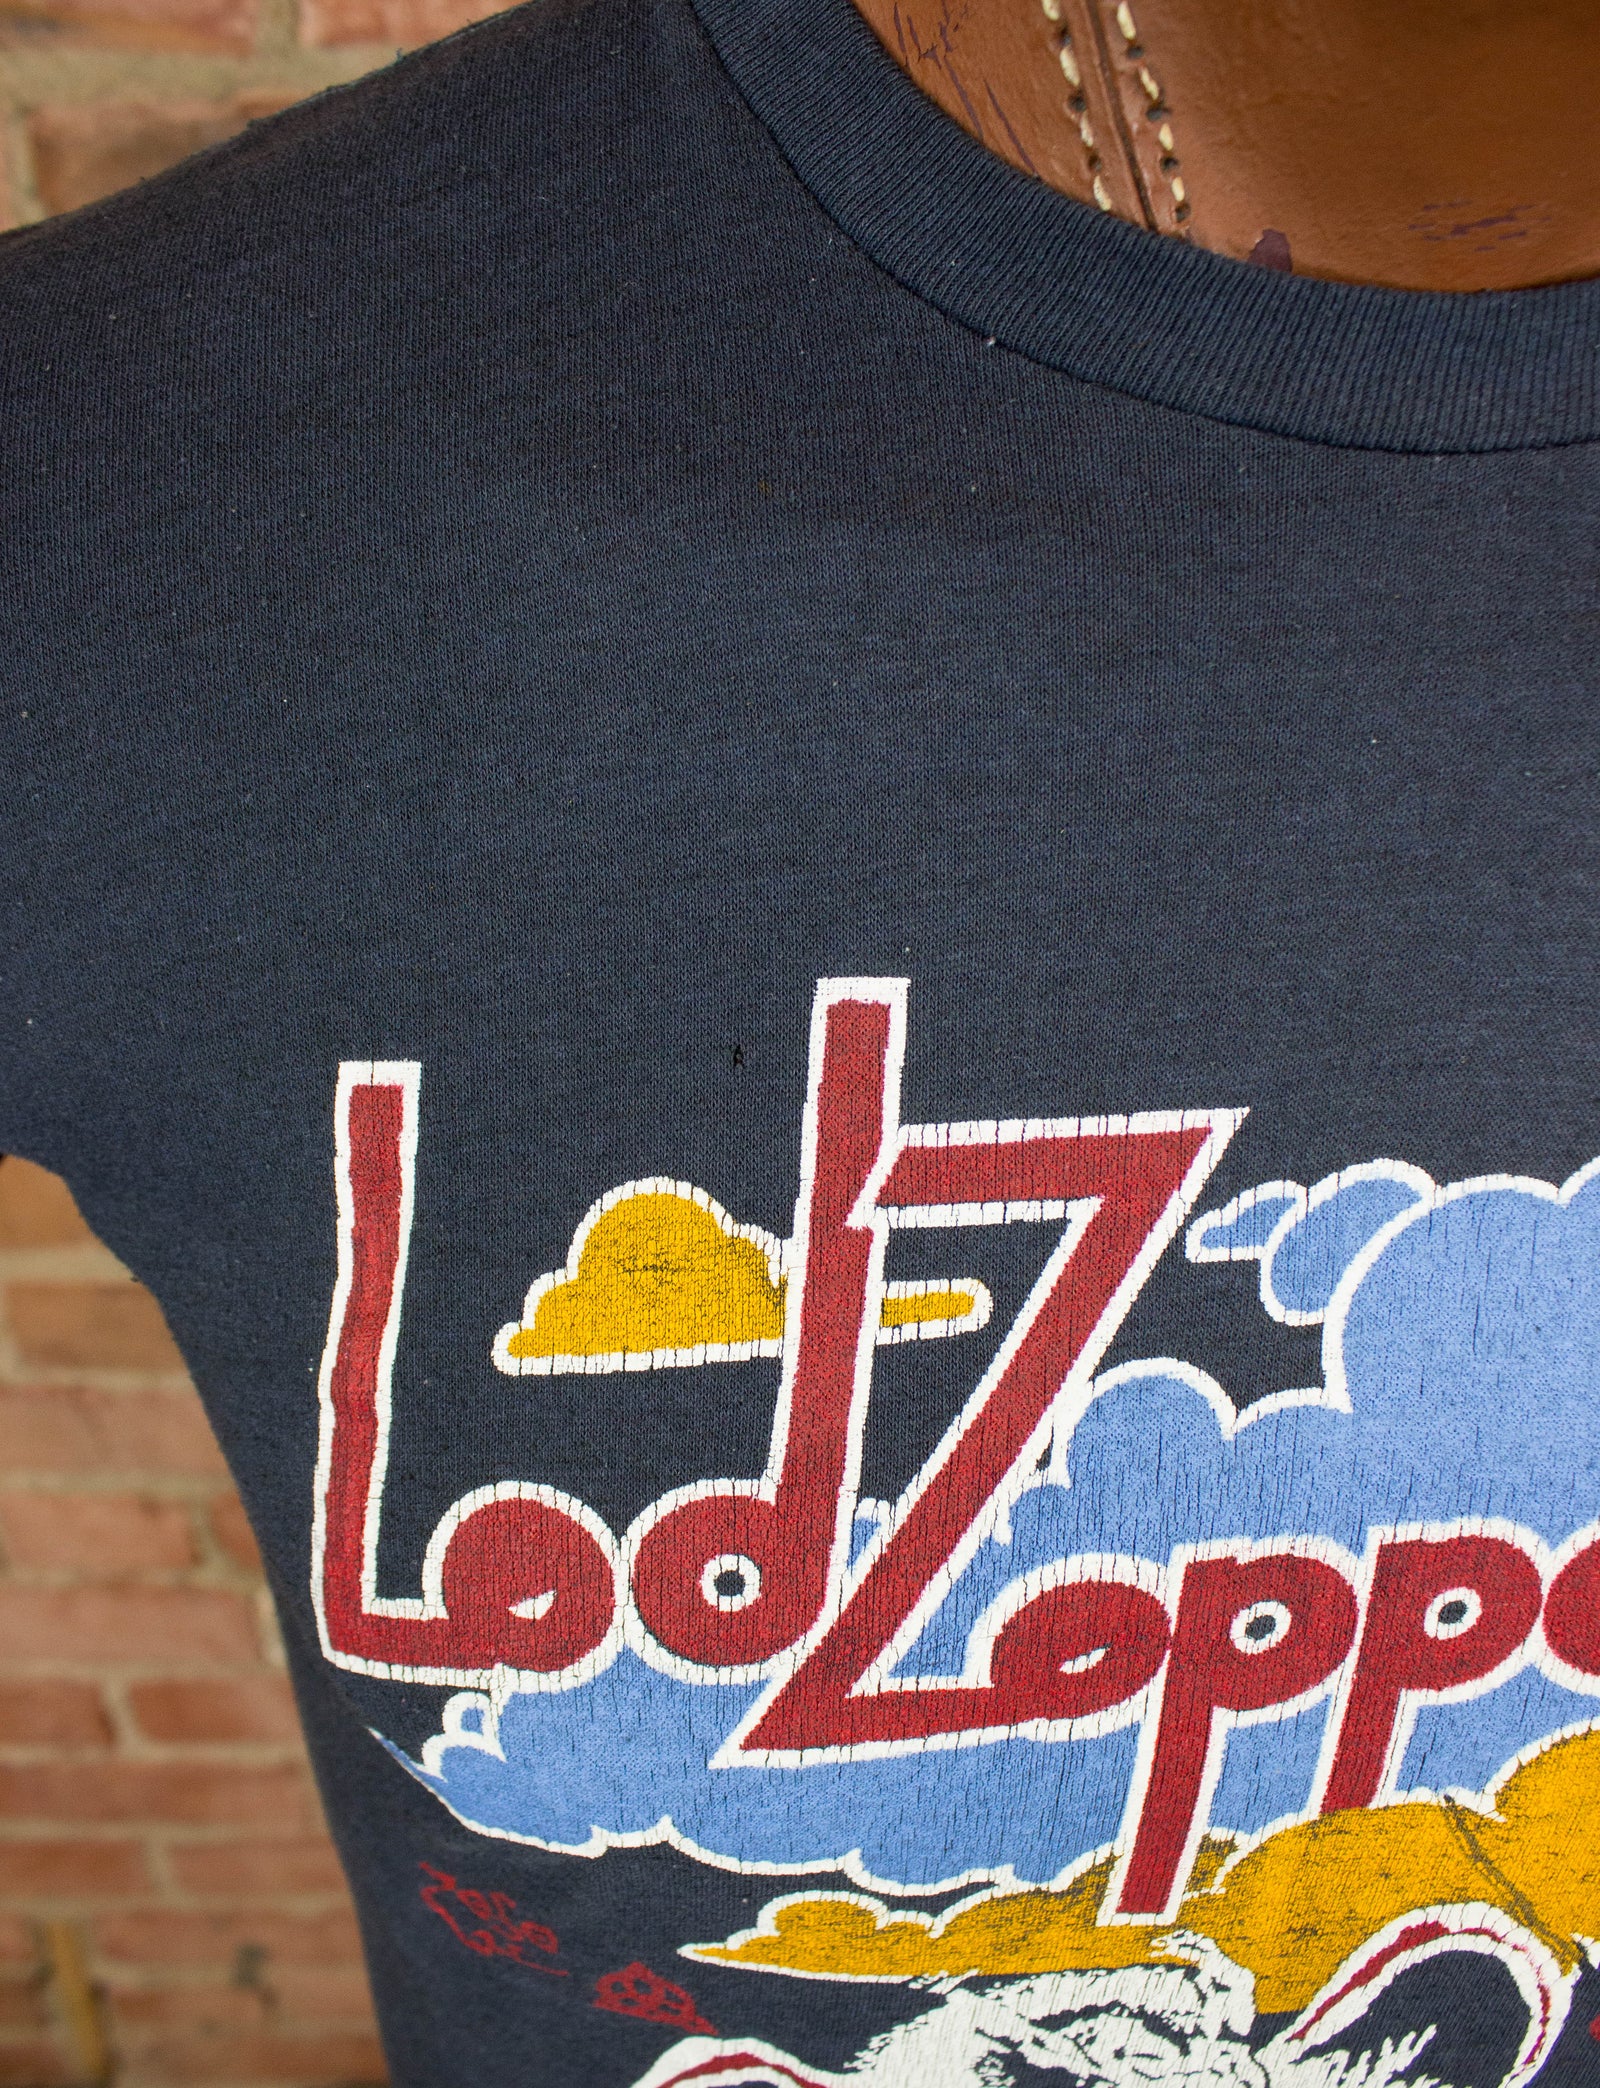 Vintage Led Zeppelin Concert T Shirt 80s Swan Song Black Medium